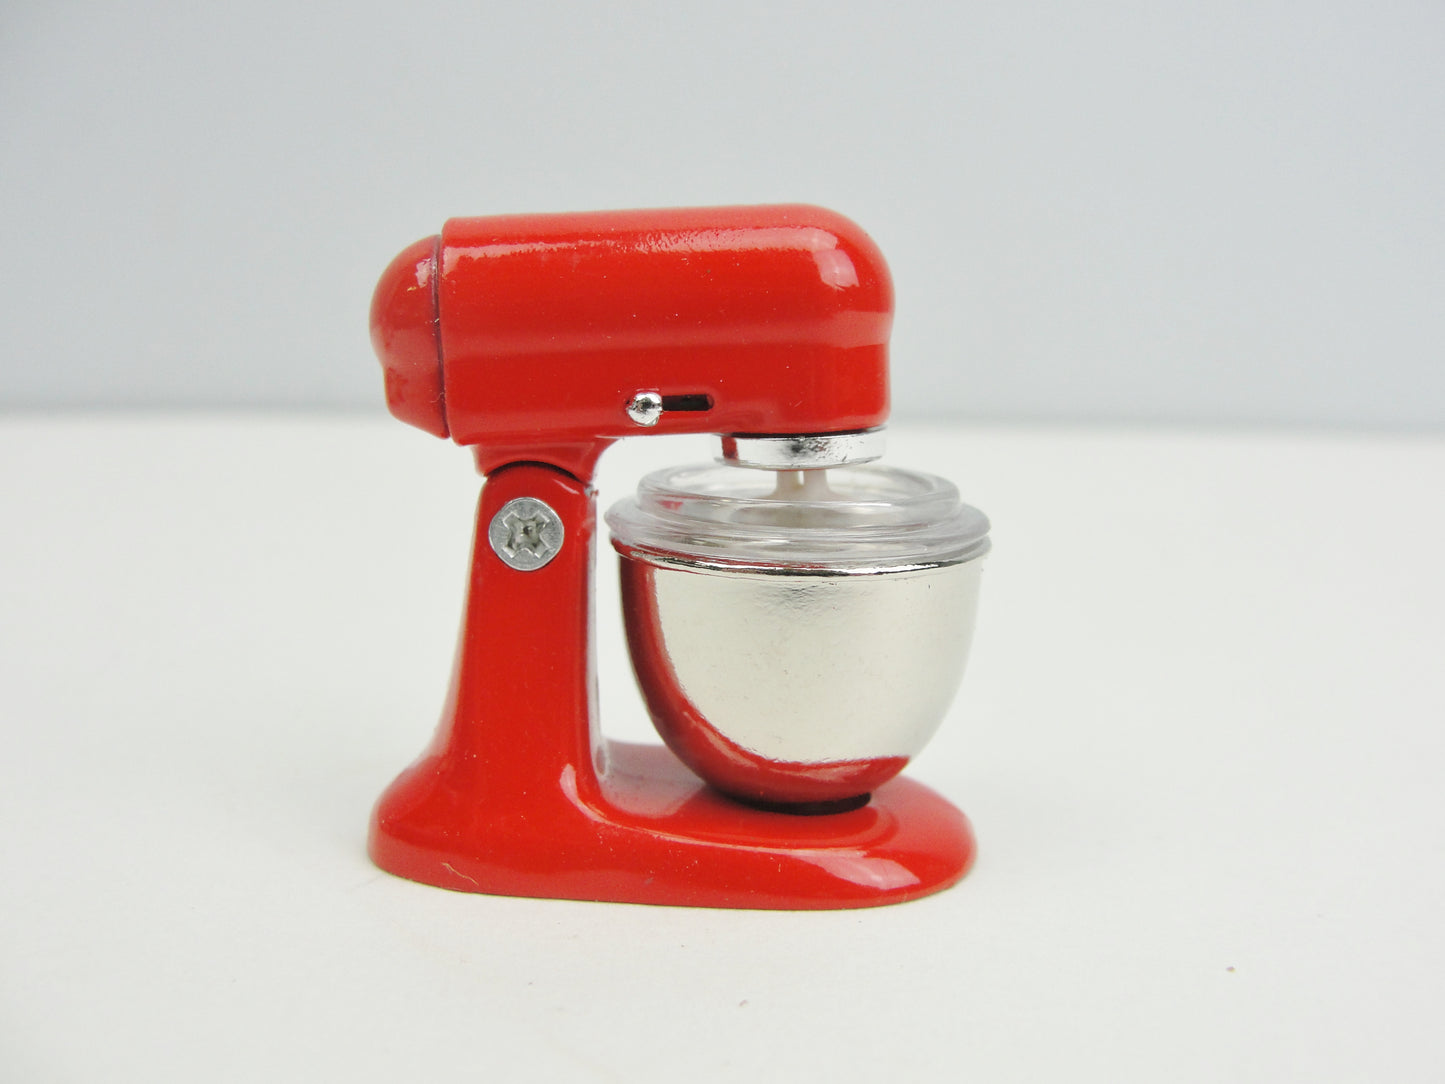 Dollhouse miniature mixer